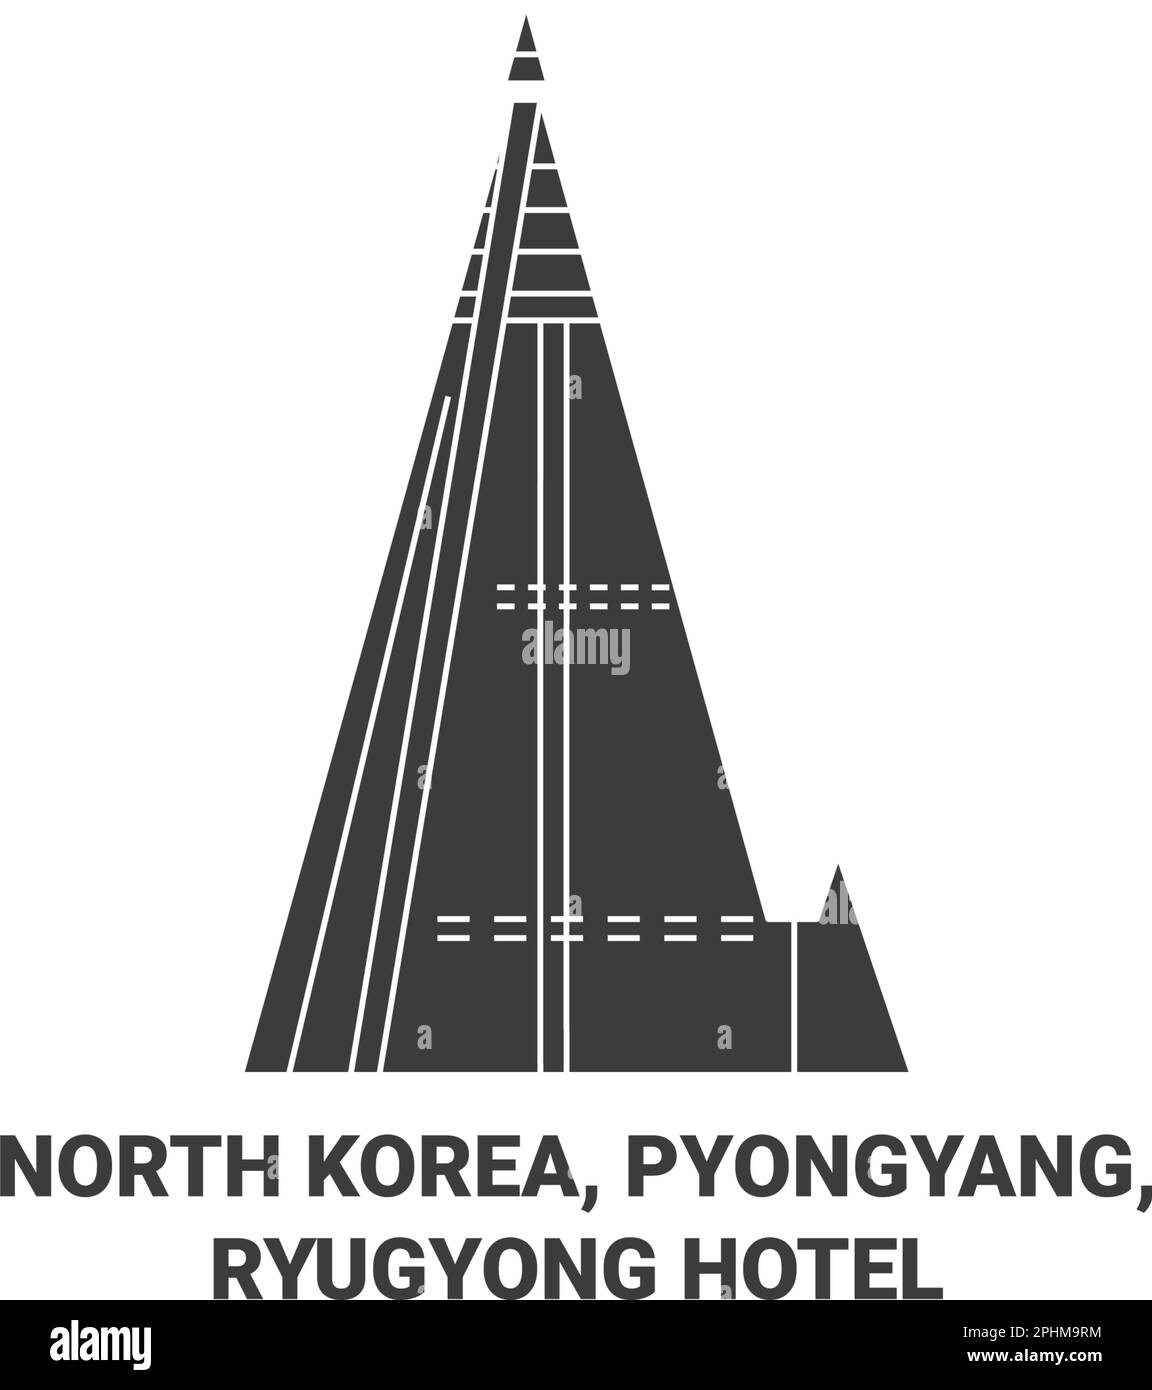 North Korea, Pyongyang, Ryugyong Hotel travel landmark vector illustration Stock Vector